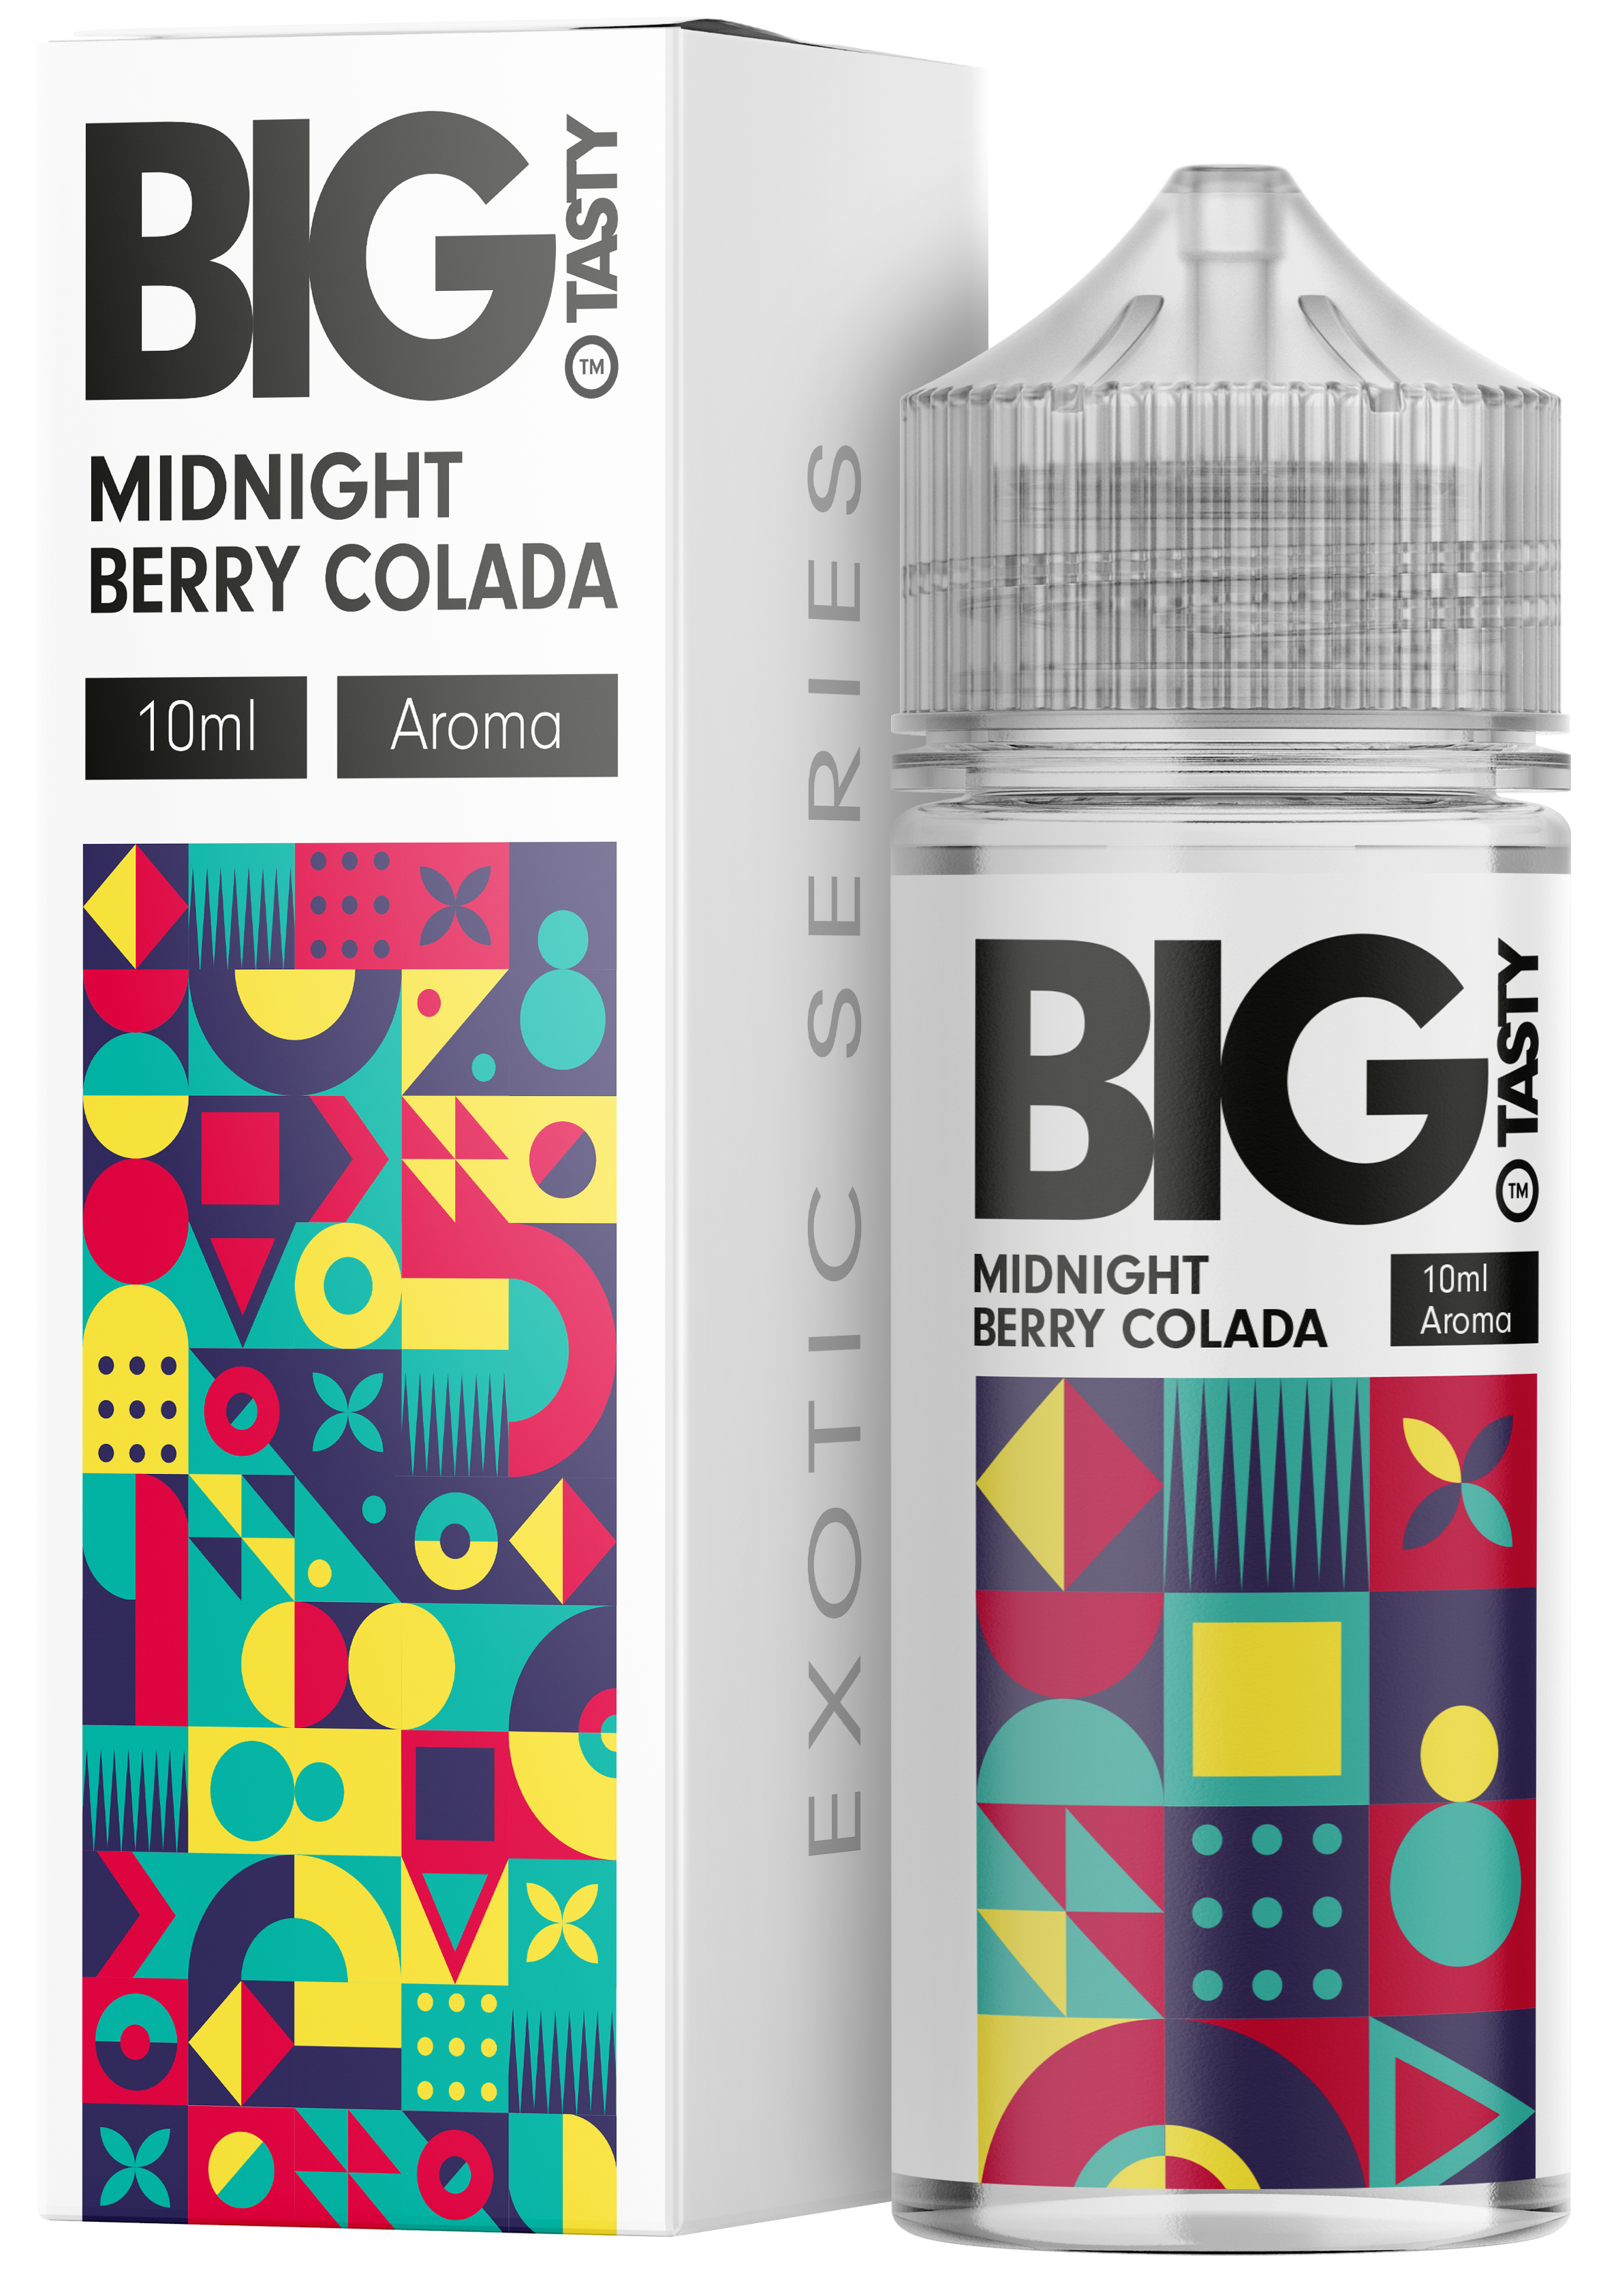 Big Tasty - Midnight Berry Colada Aroma 10ml